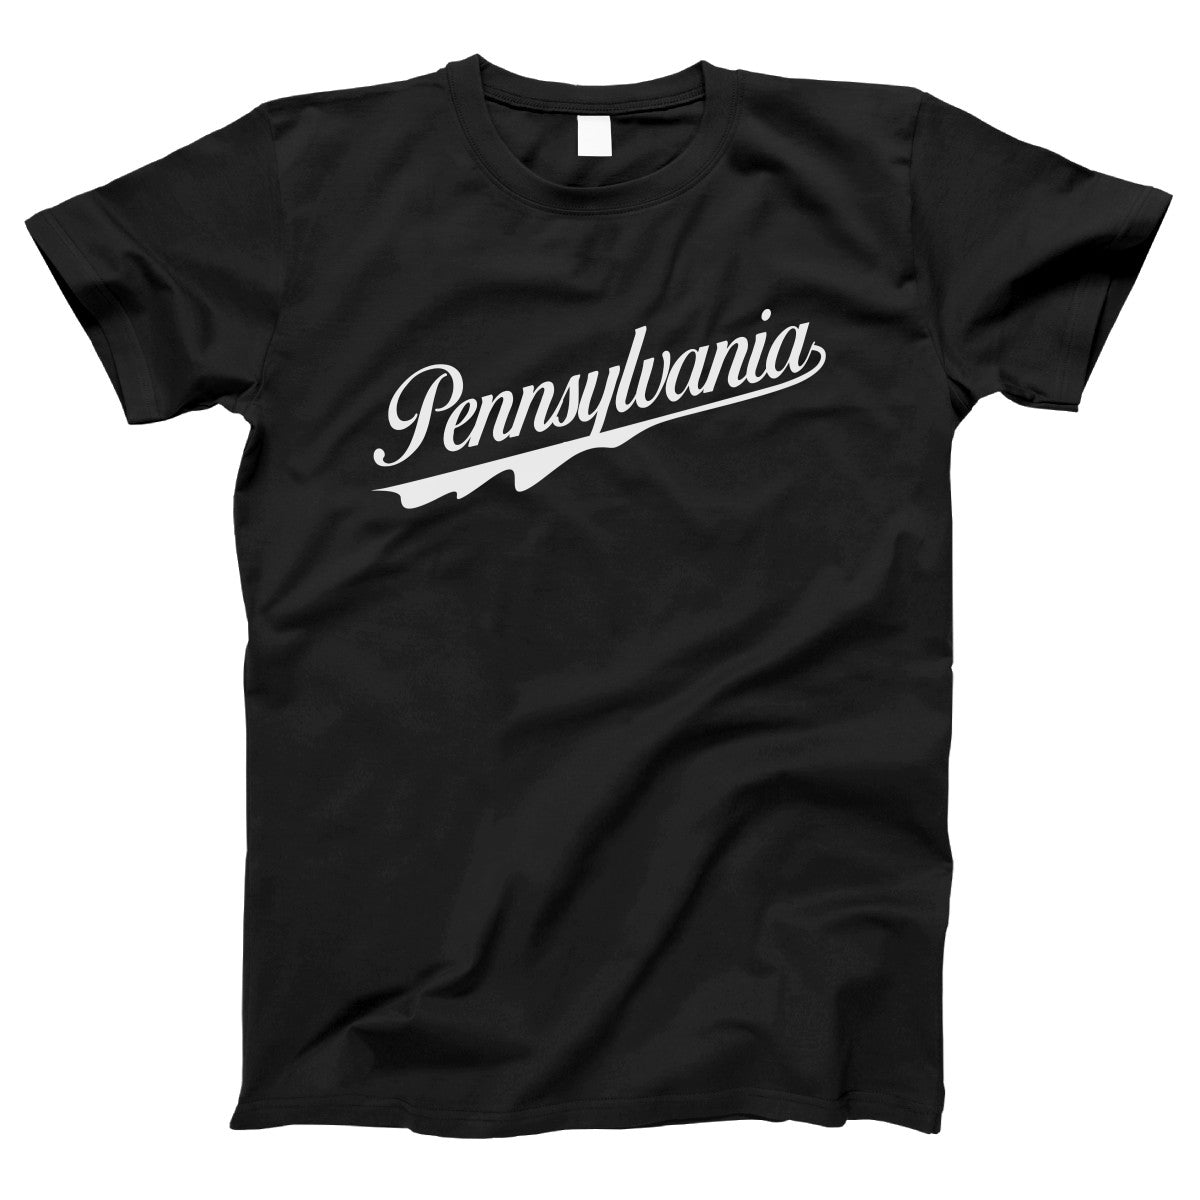 Pennsylvania Women's T-shirt